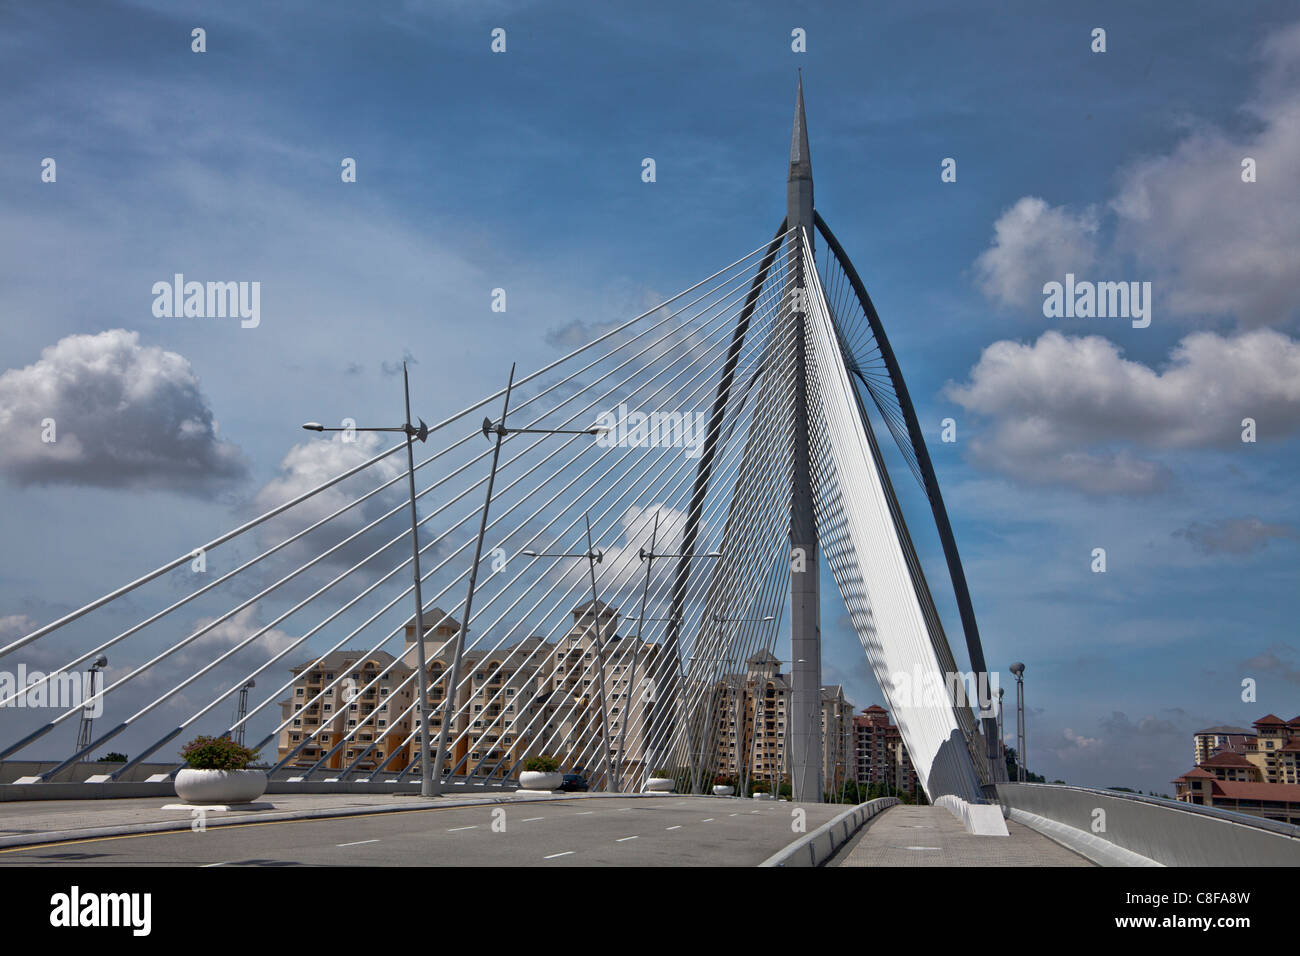 Malaysia, Asien, in der Nähe, in der Nähe, Kuala Lumpur, Putrajaya, Seri Wawasan Brücke, Brücke, modern, Street, Architektur Stockfoto